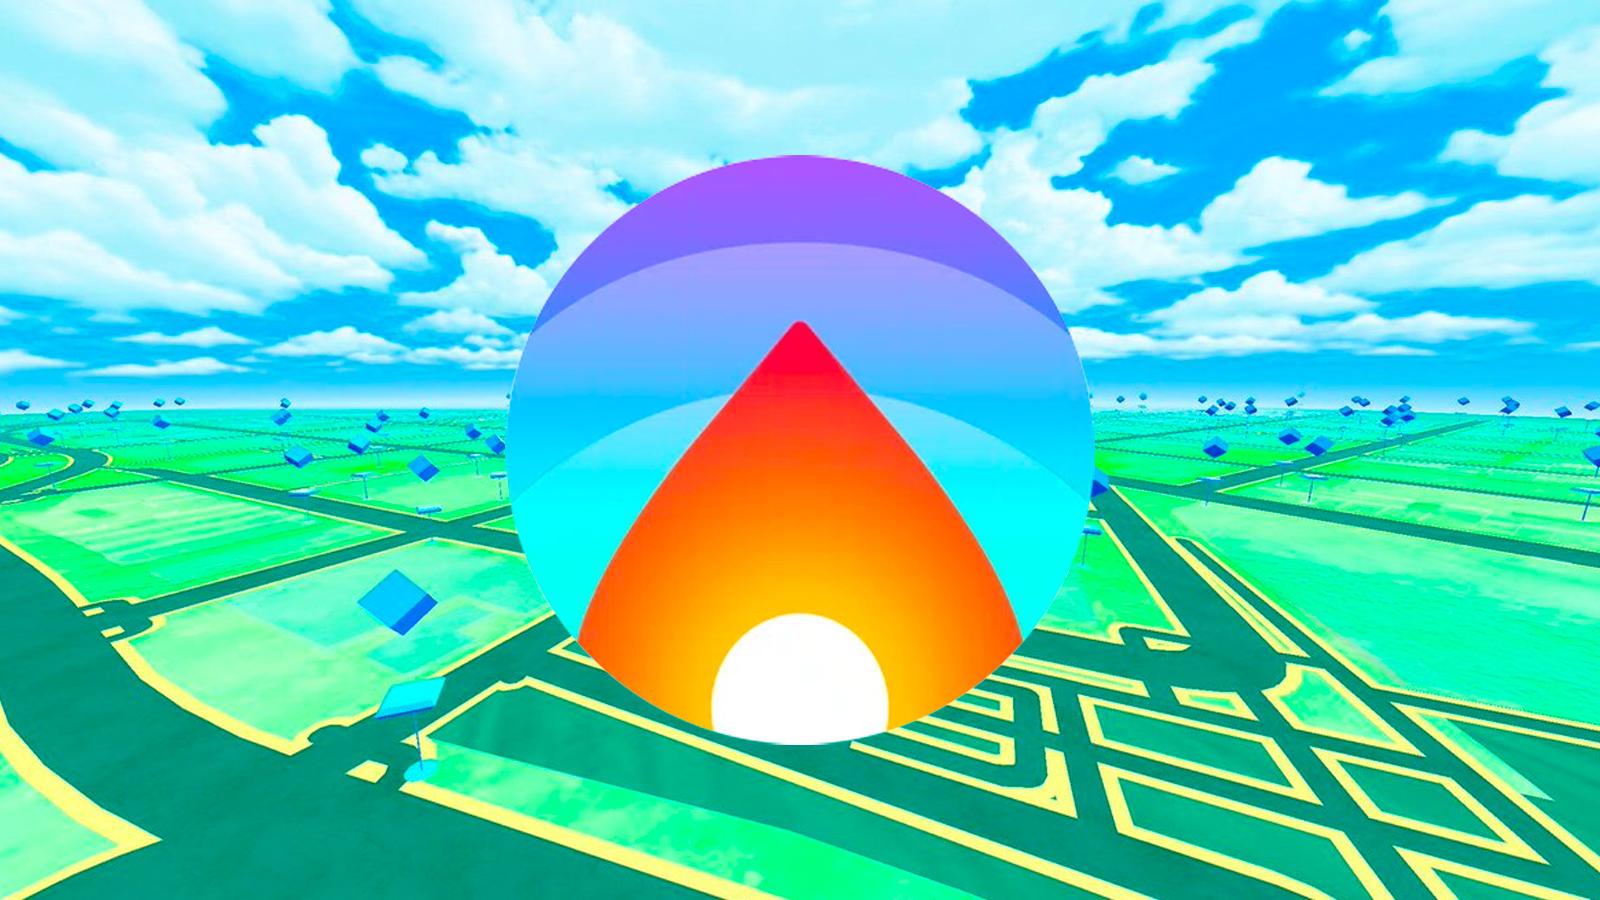 The Campfire logo in the Pokemon Go app